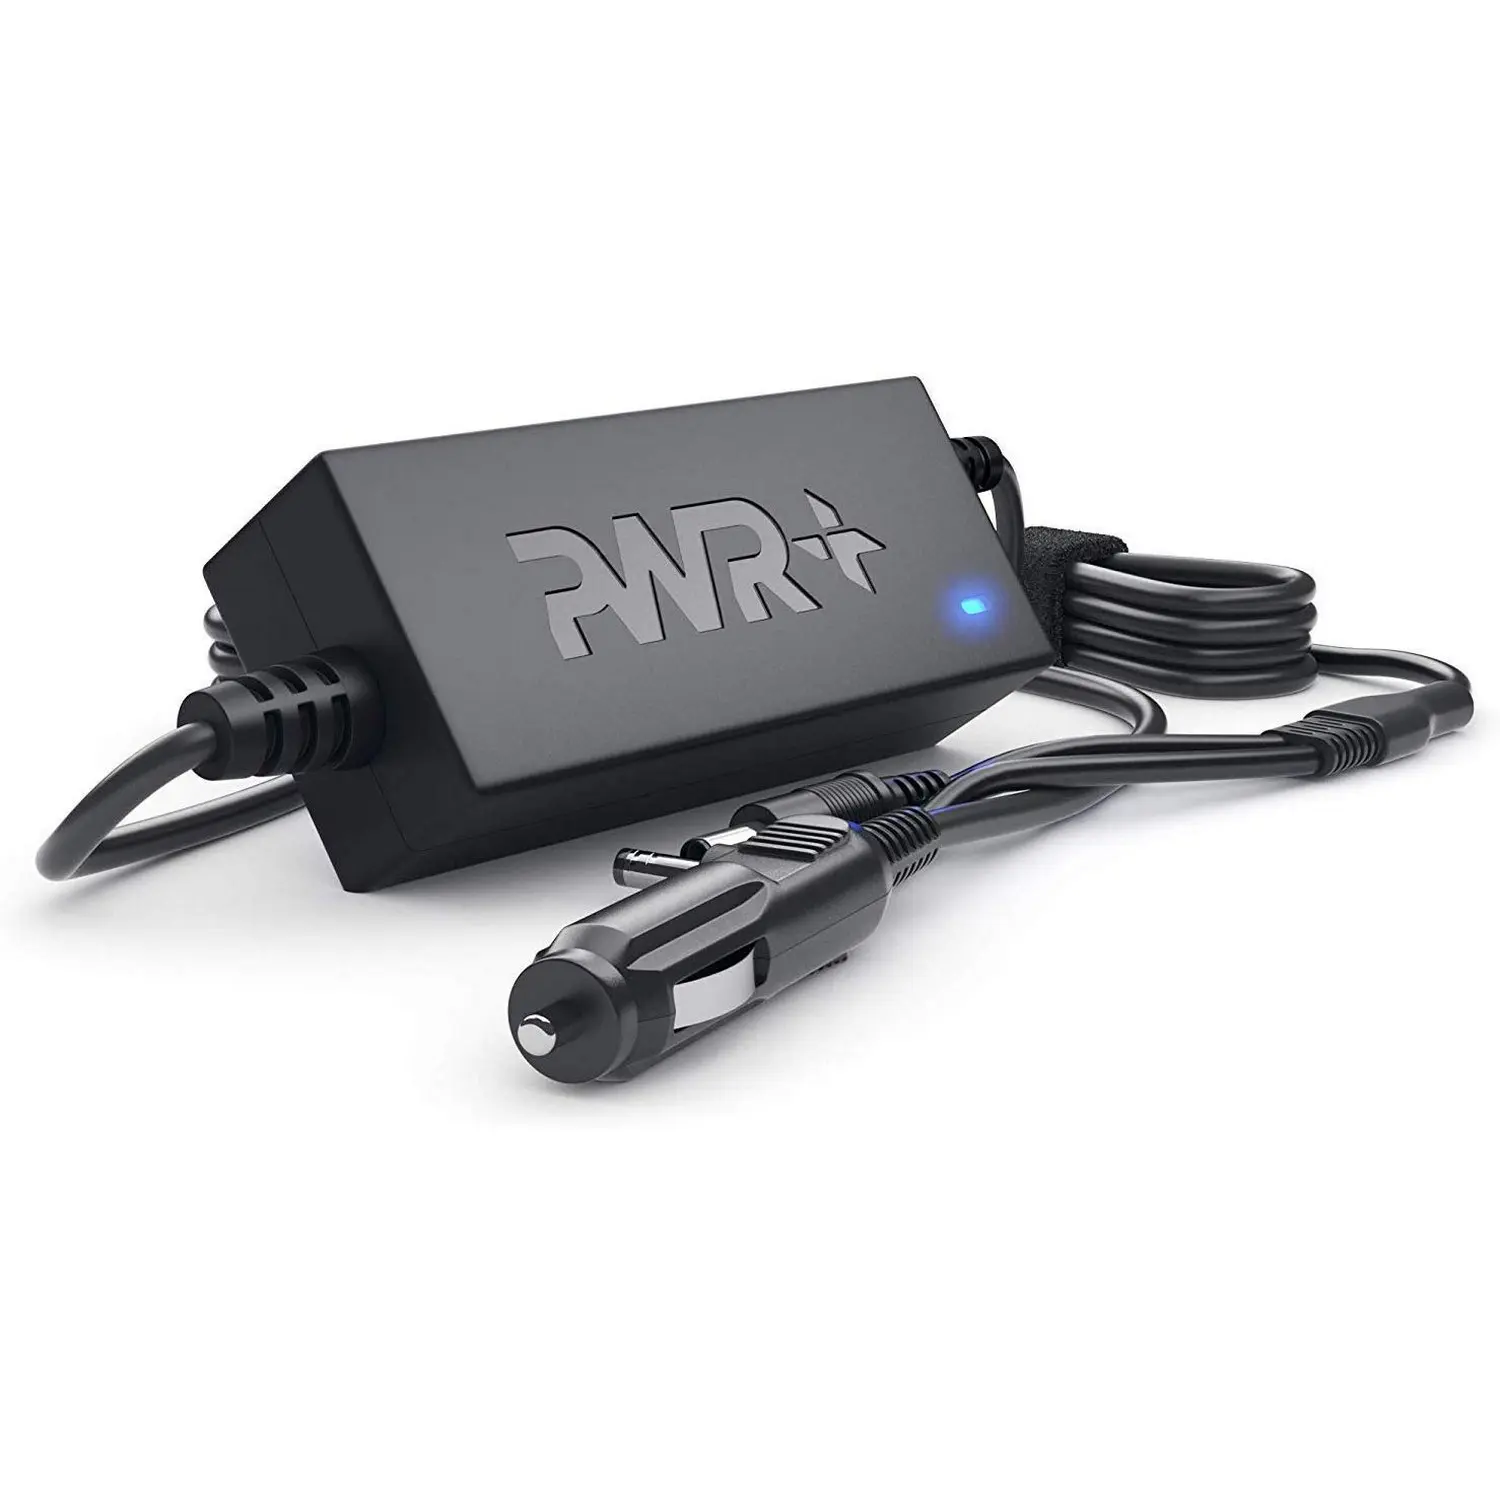 Hewlett packard laptop car charger: convenient charging solution